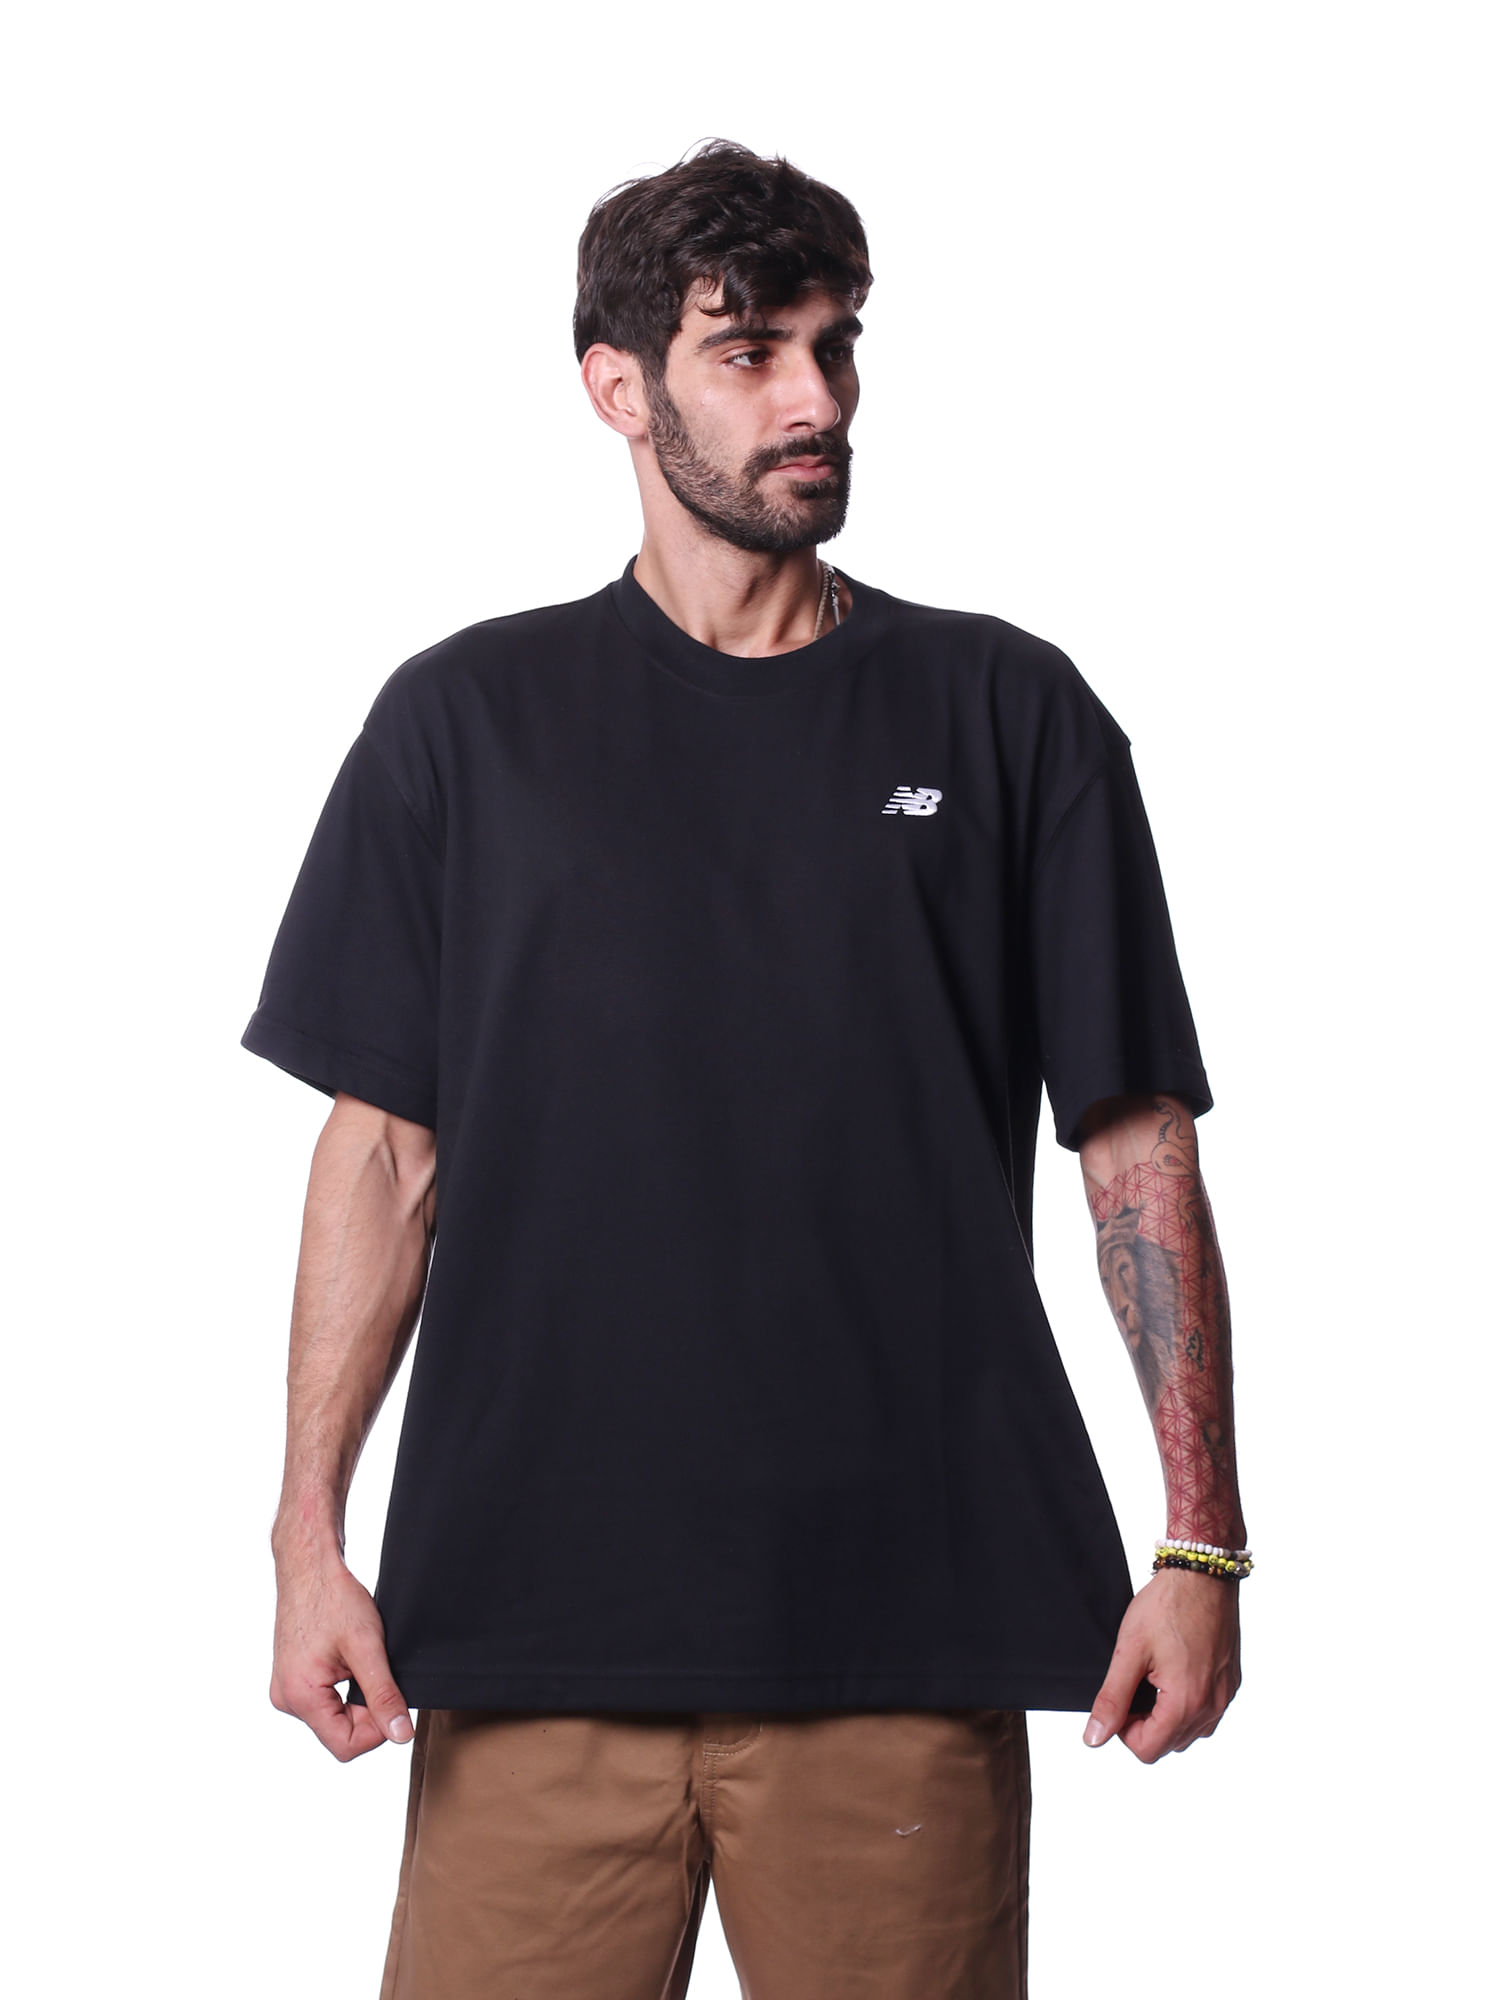 Camiseta-new-balance-small-logo-Preto